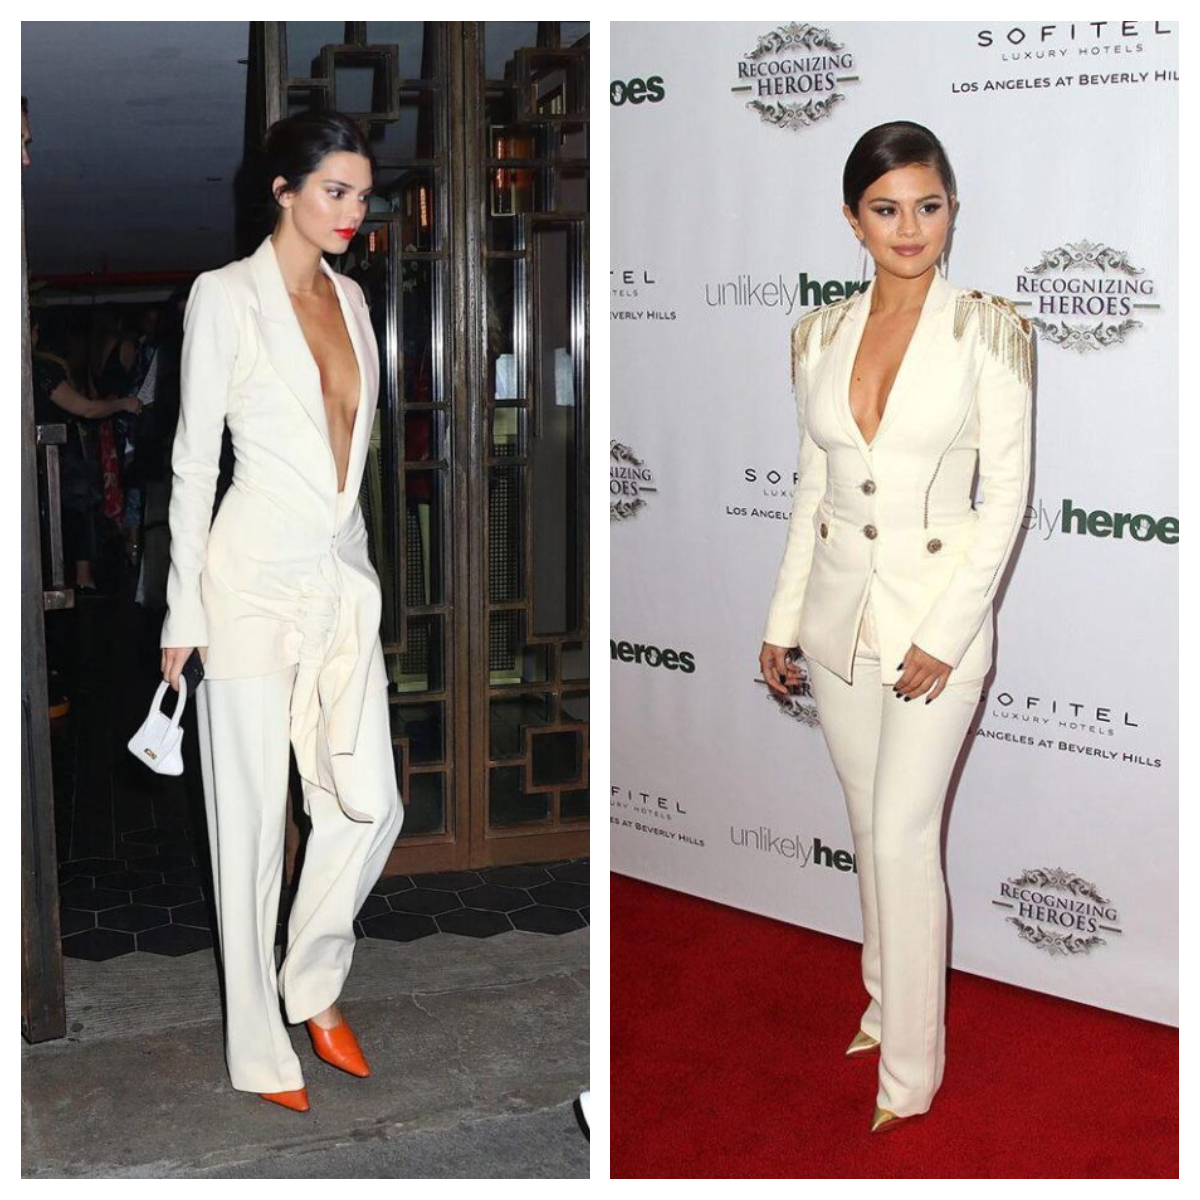 Matchy-matchy! Șapte momente în care Selena Gomez a copiat-o pe Kendall Jenner